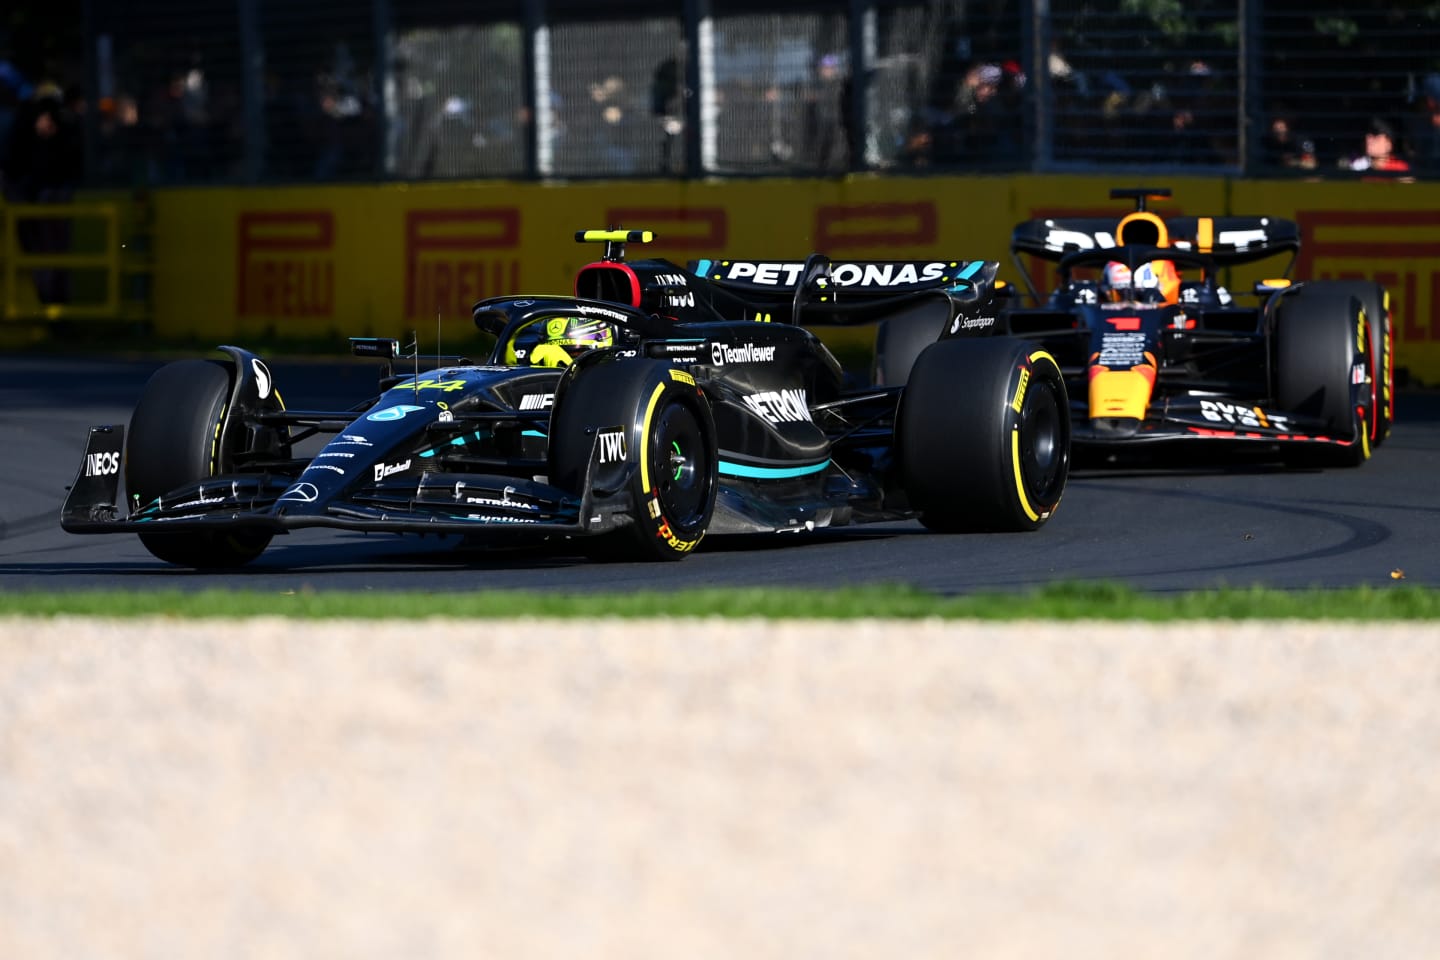 MELBOURNE, AUSTRALIA - APRIL 02: Lewis Hamilton of Great Britain driving the (44) Mercedes AMG